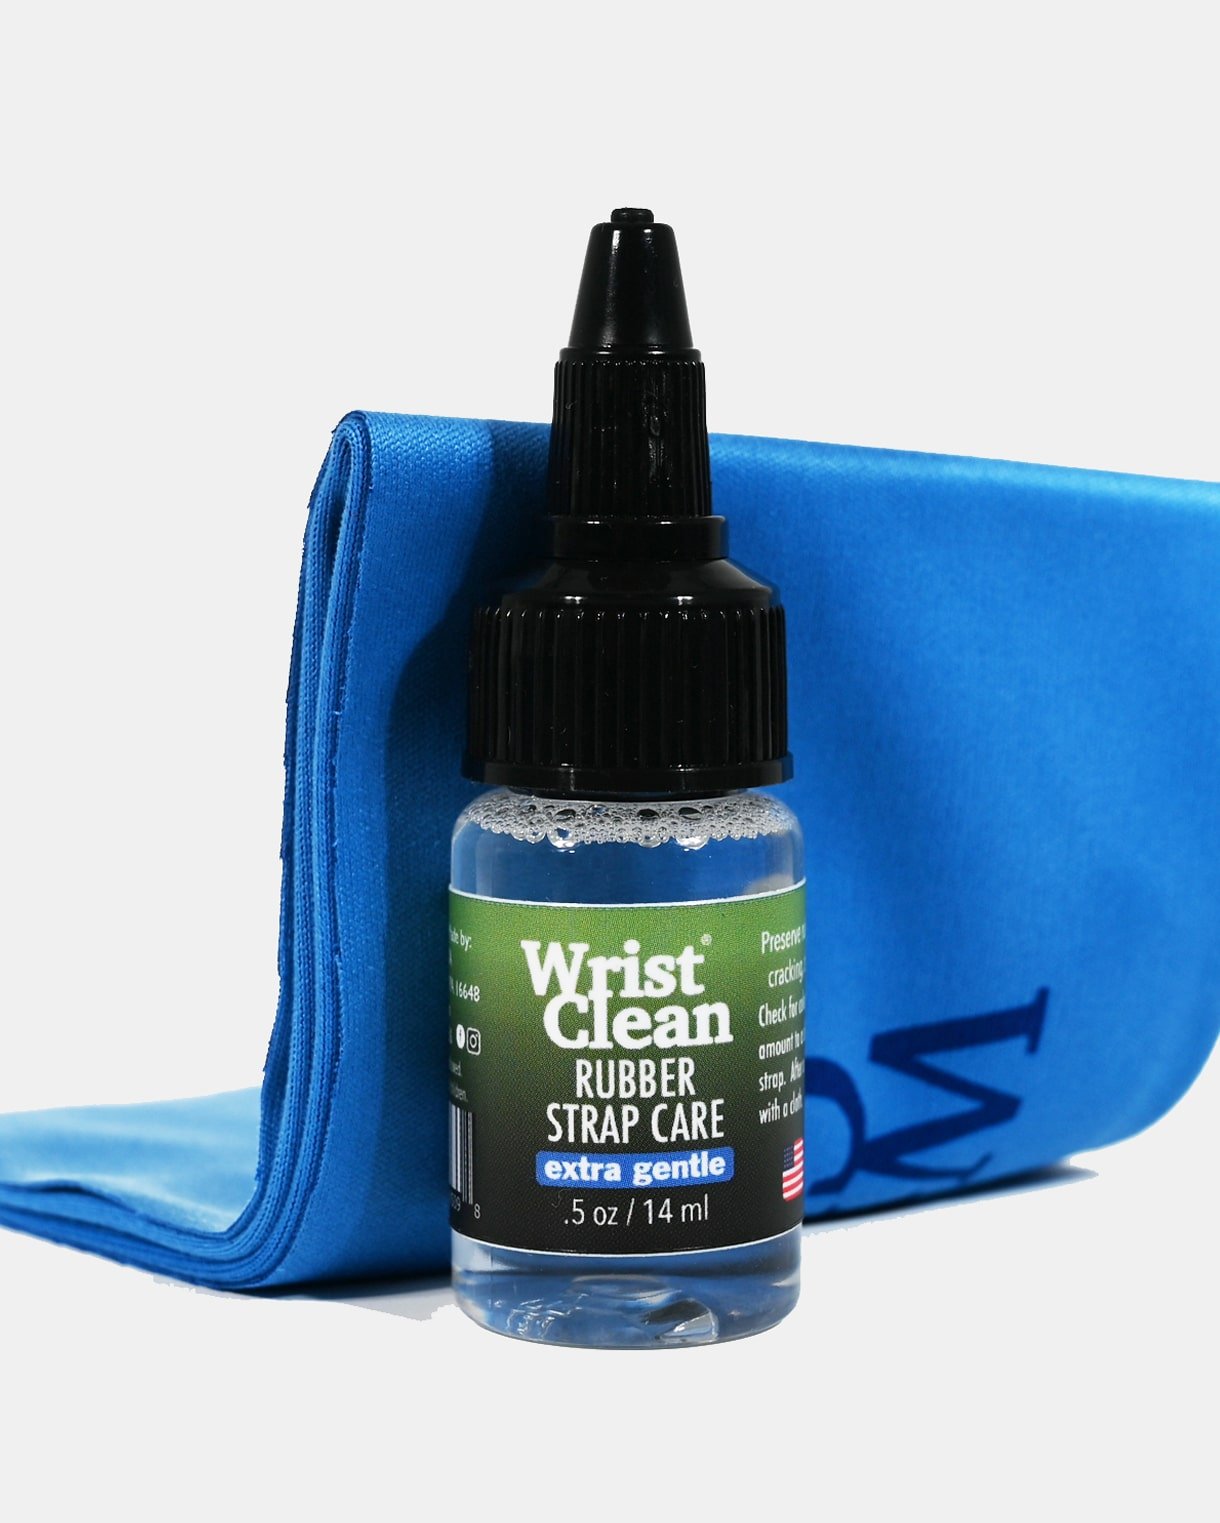 WristClean Rubber Strap Care Kit